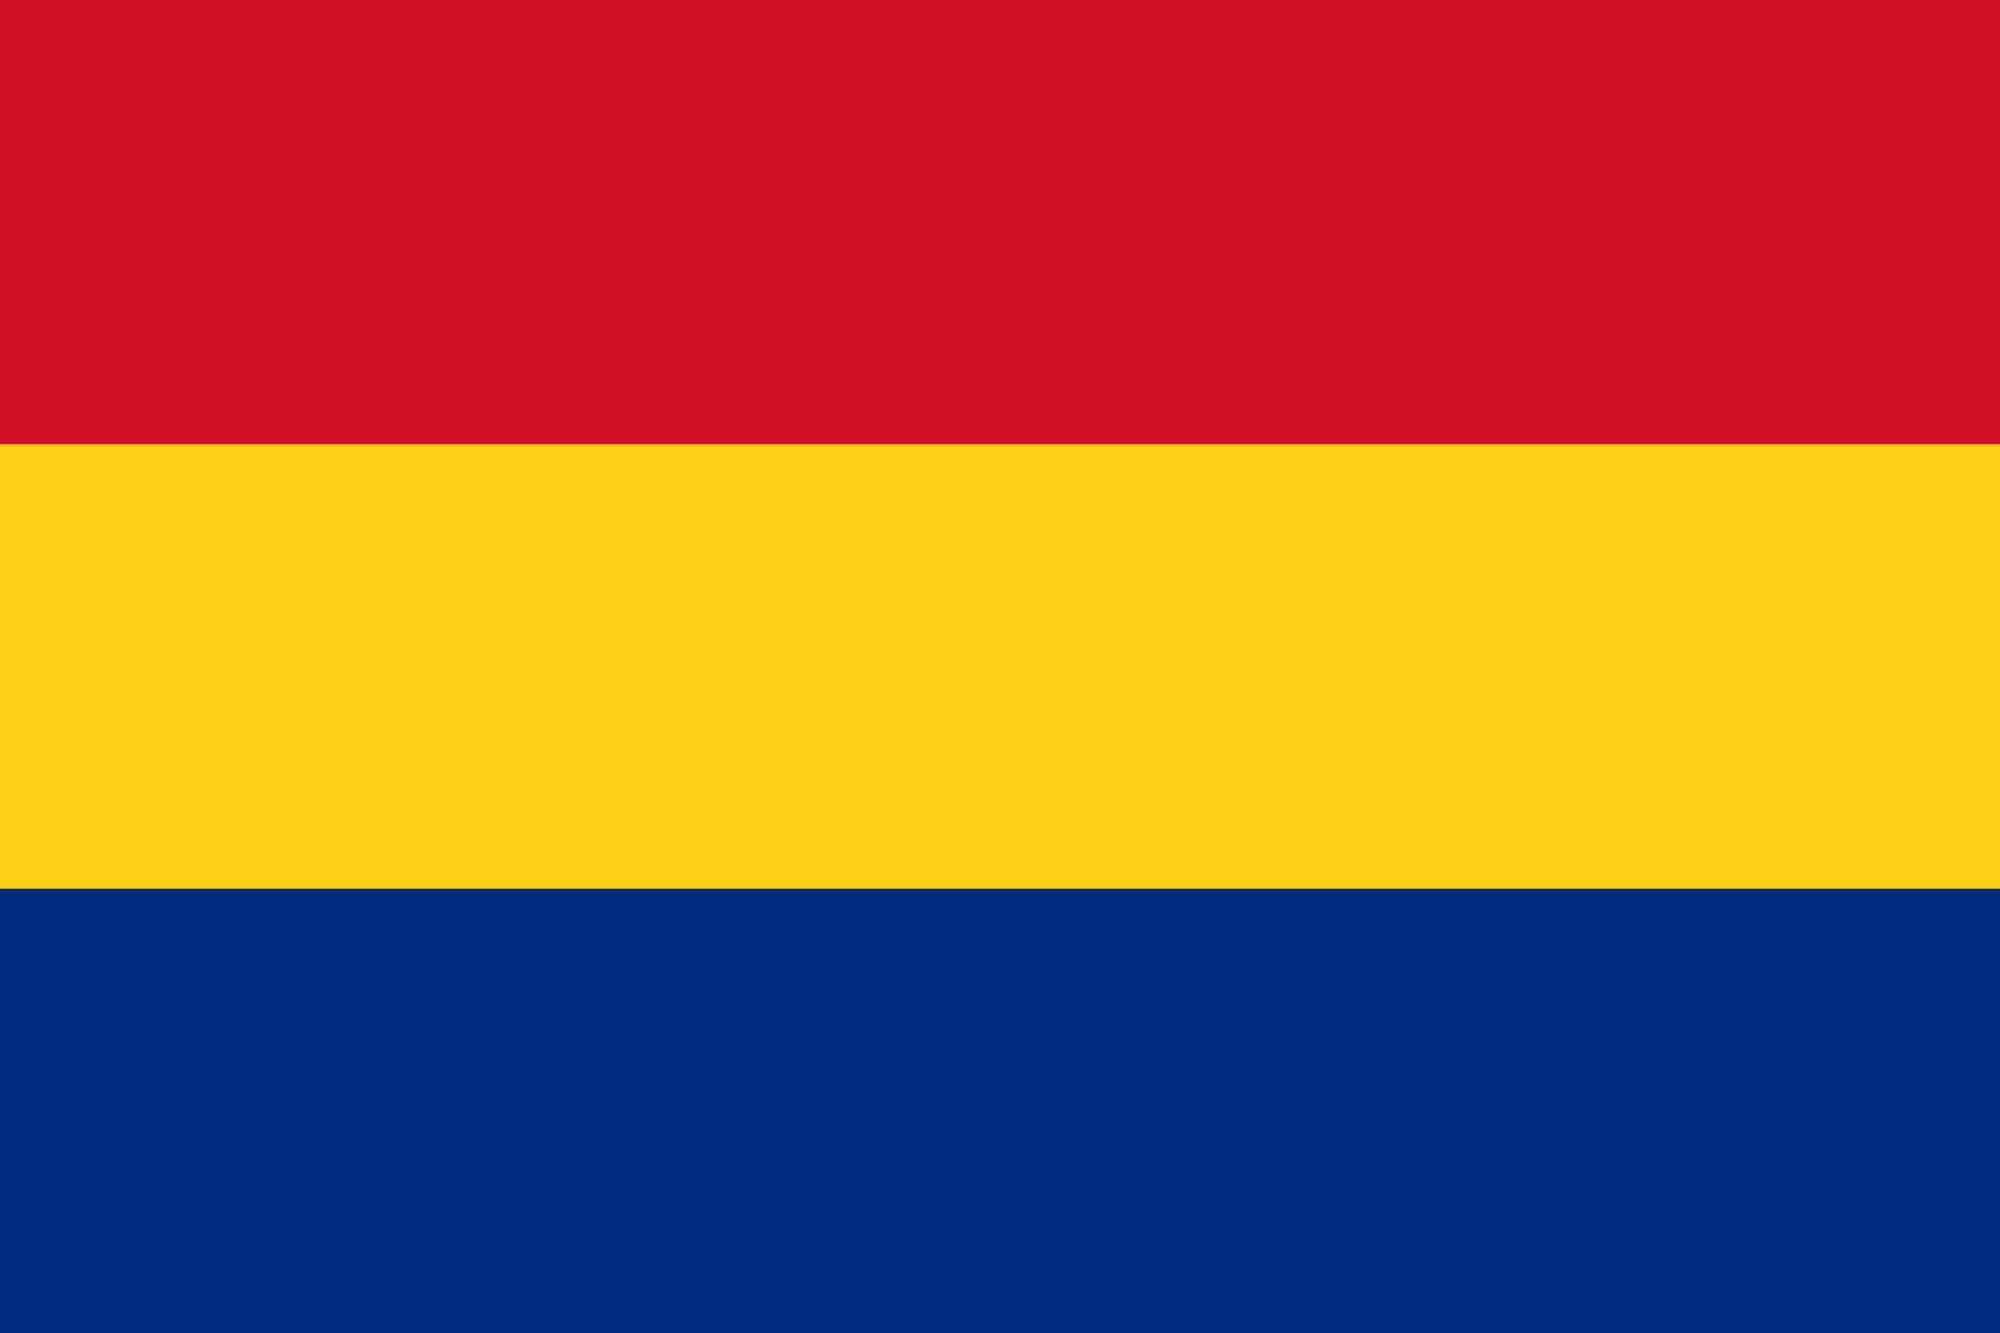 ROMANIA ROMANIAN FLAG 5FT X 3FT 